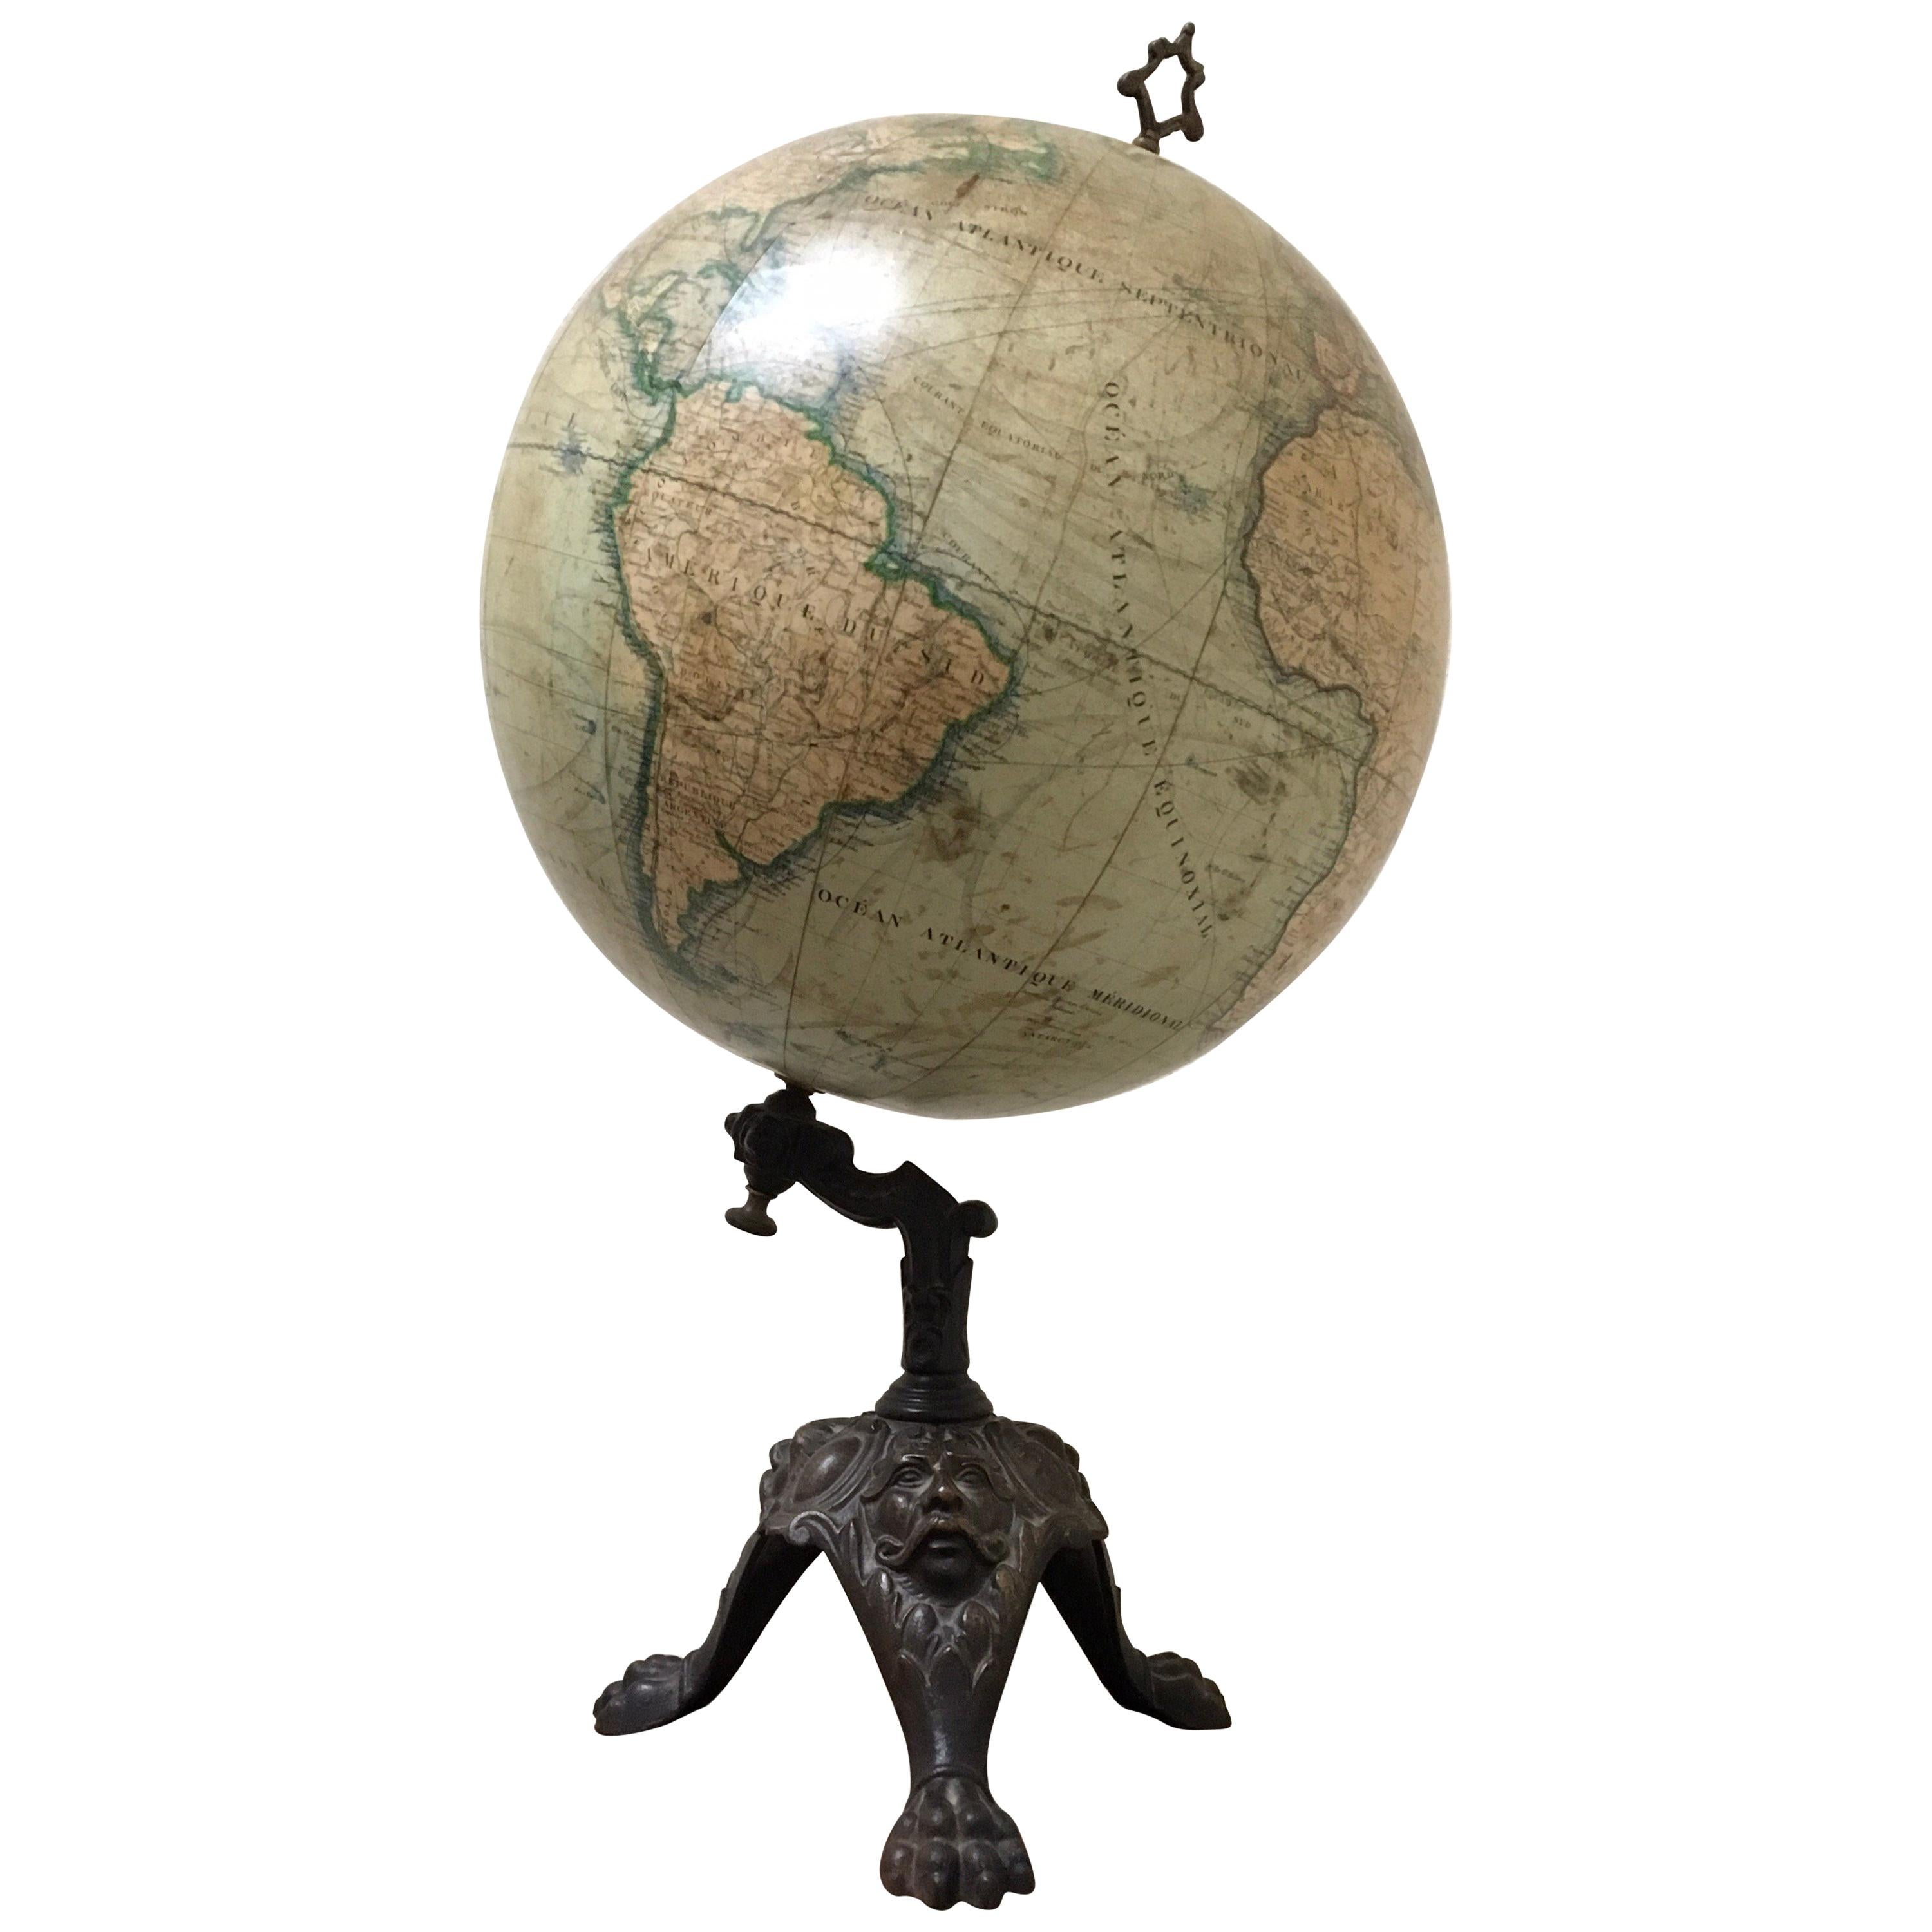 Pre-World War 1 Terrestrial Globe by J. Lebegue et Cie, Paris, France